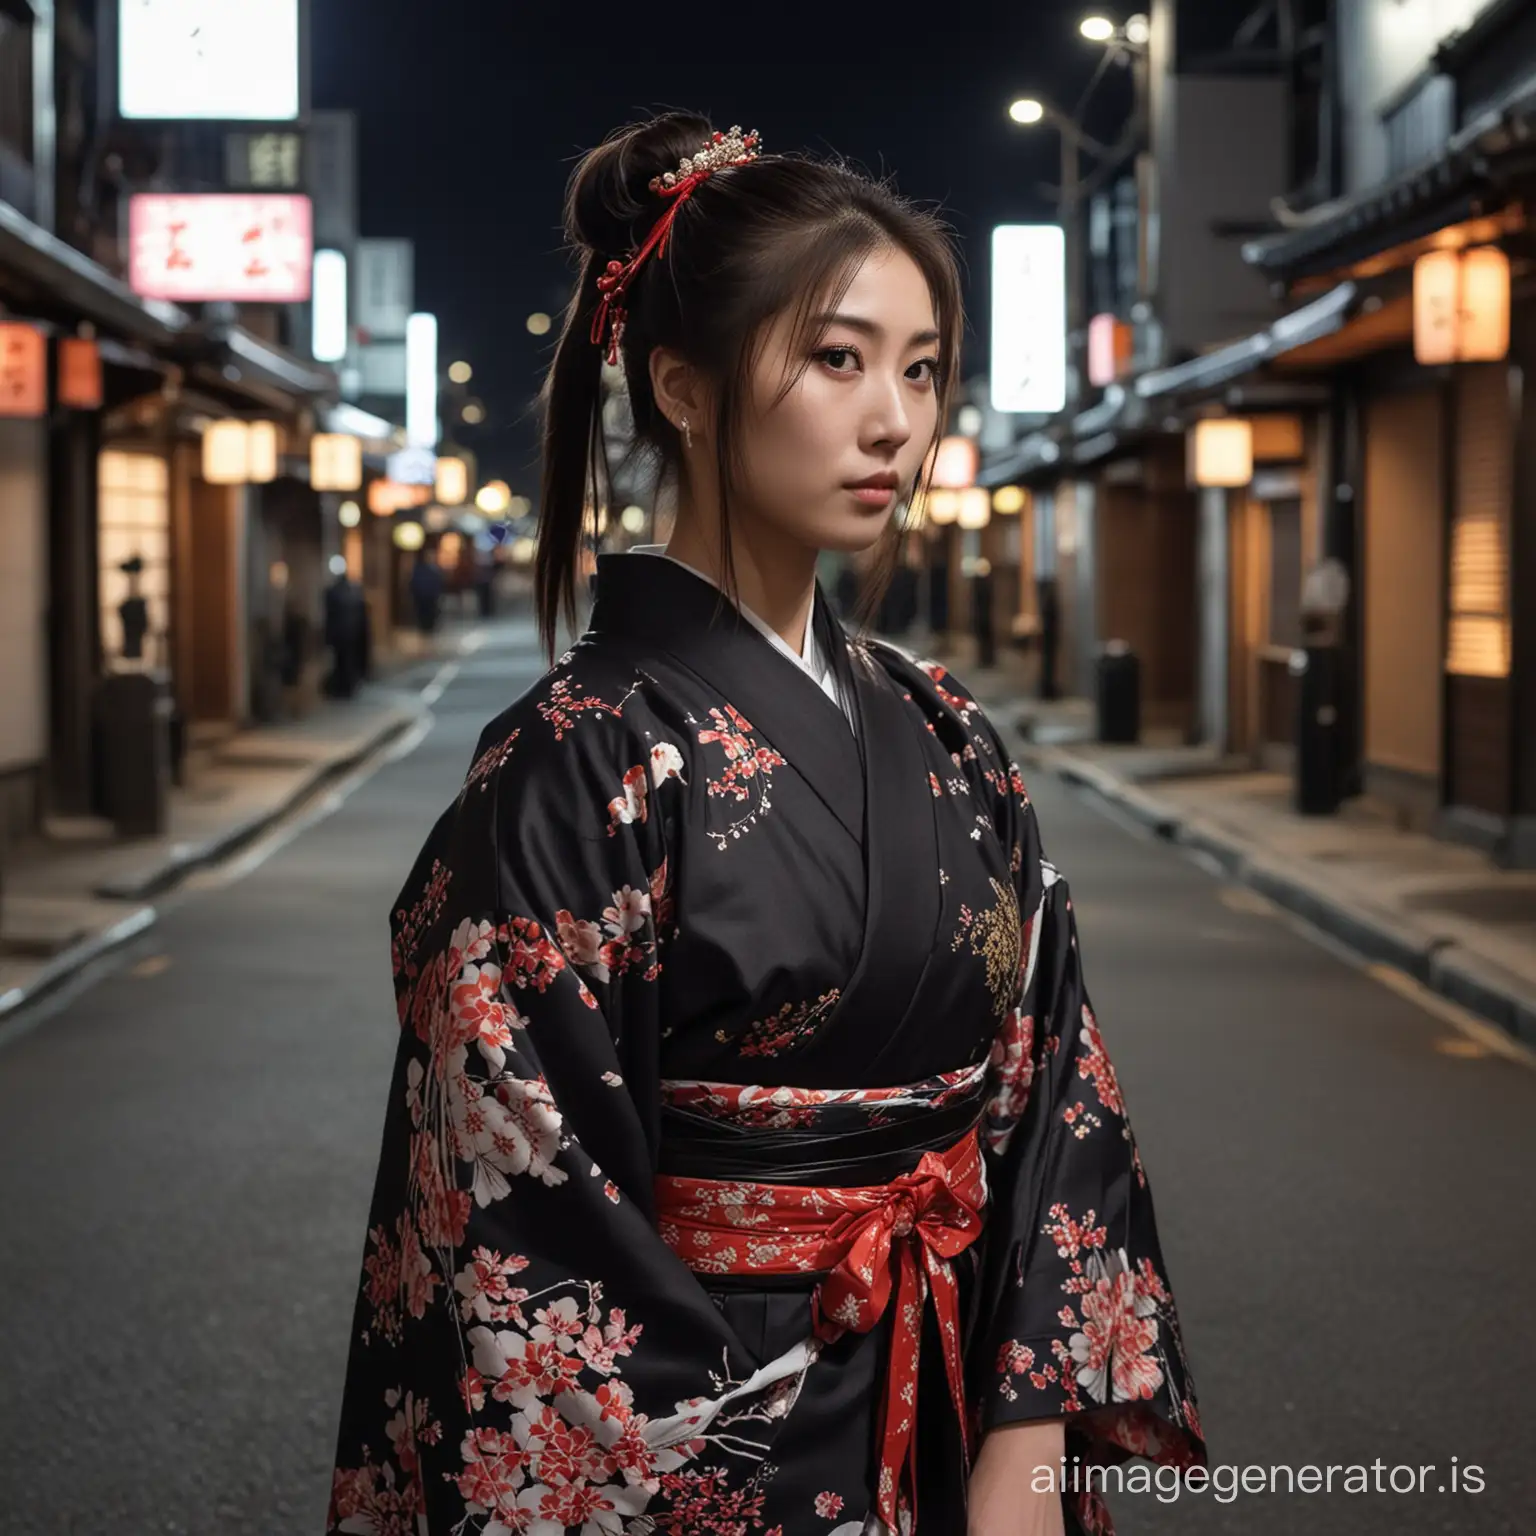 Mysterious-Japanese-Woman-with-Samurai-in-Night-Street-Scene